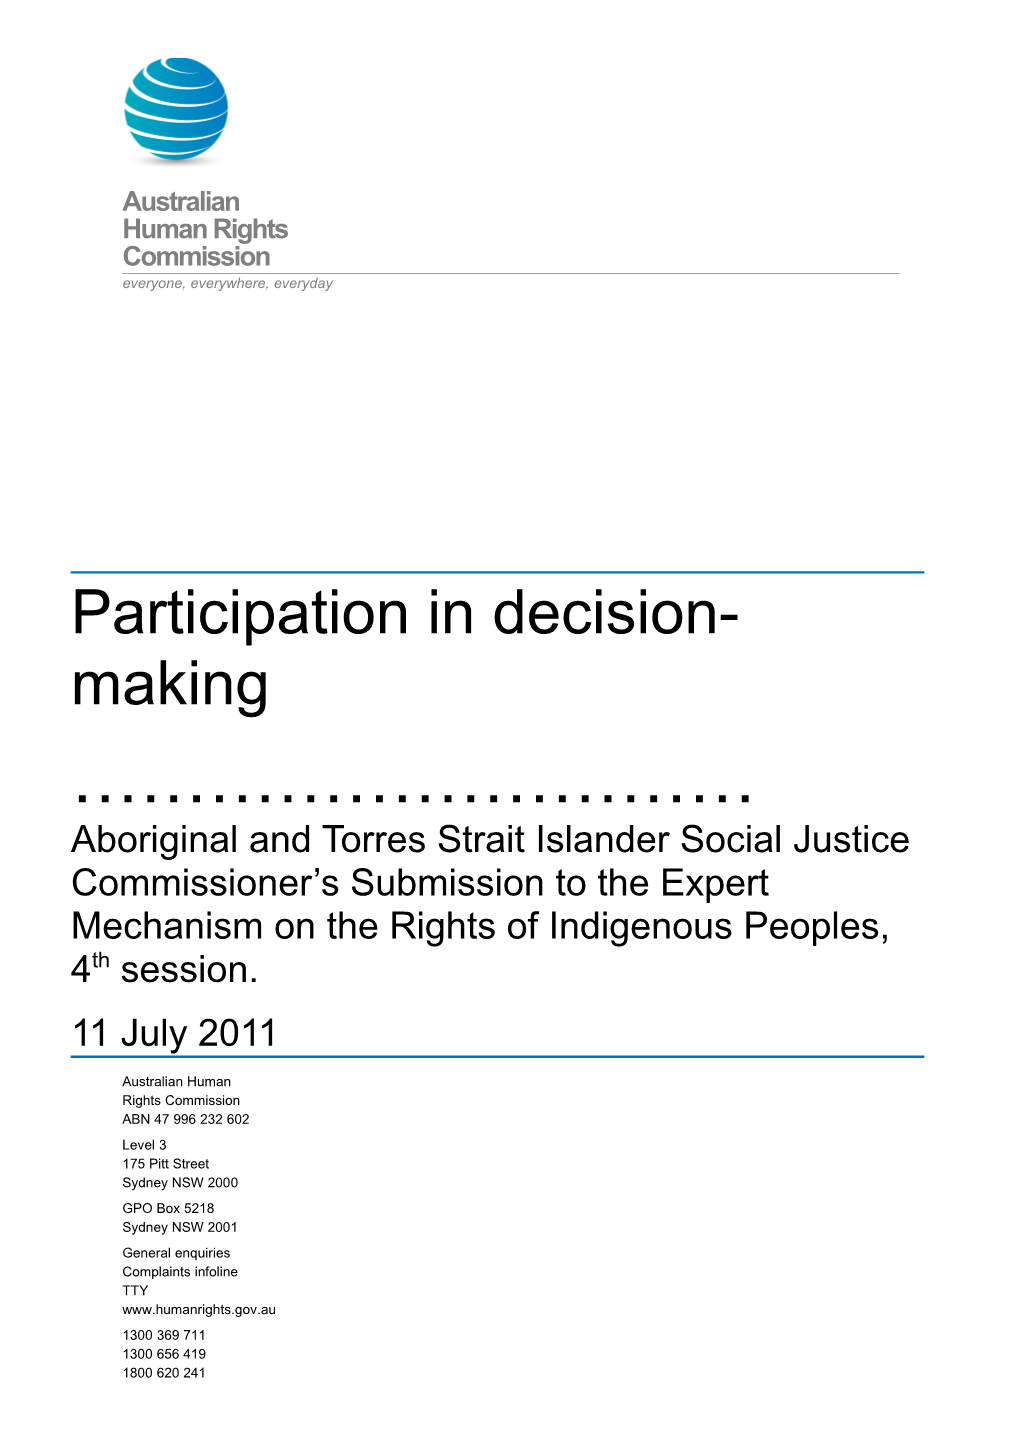 Aboriginal and Torres Strait Islander Social Justice Commissioner